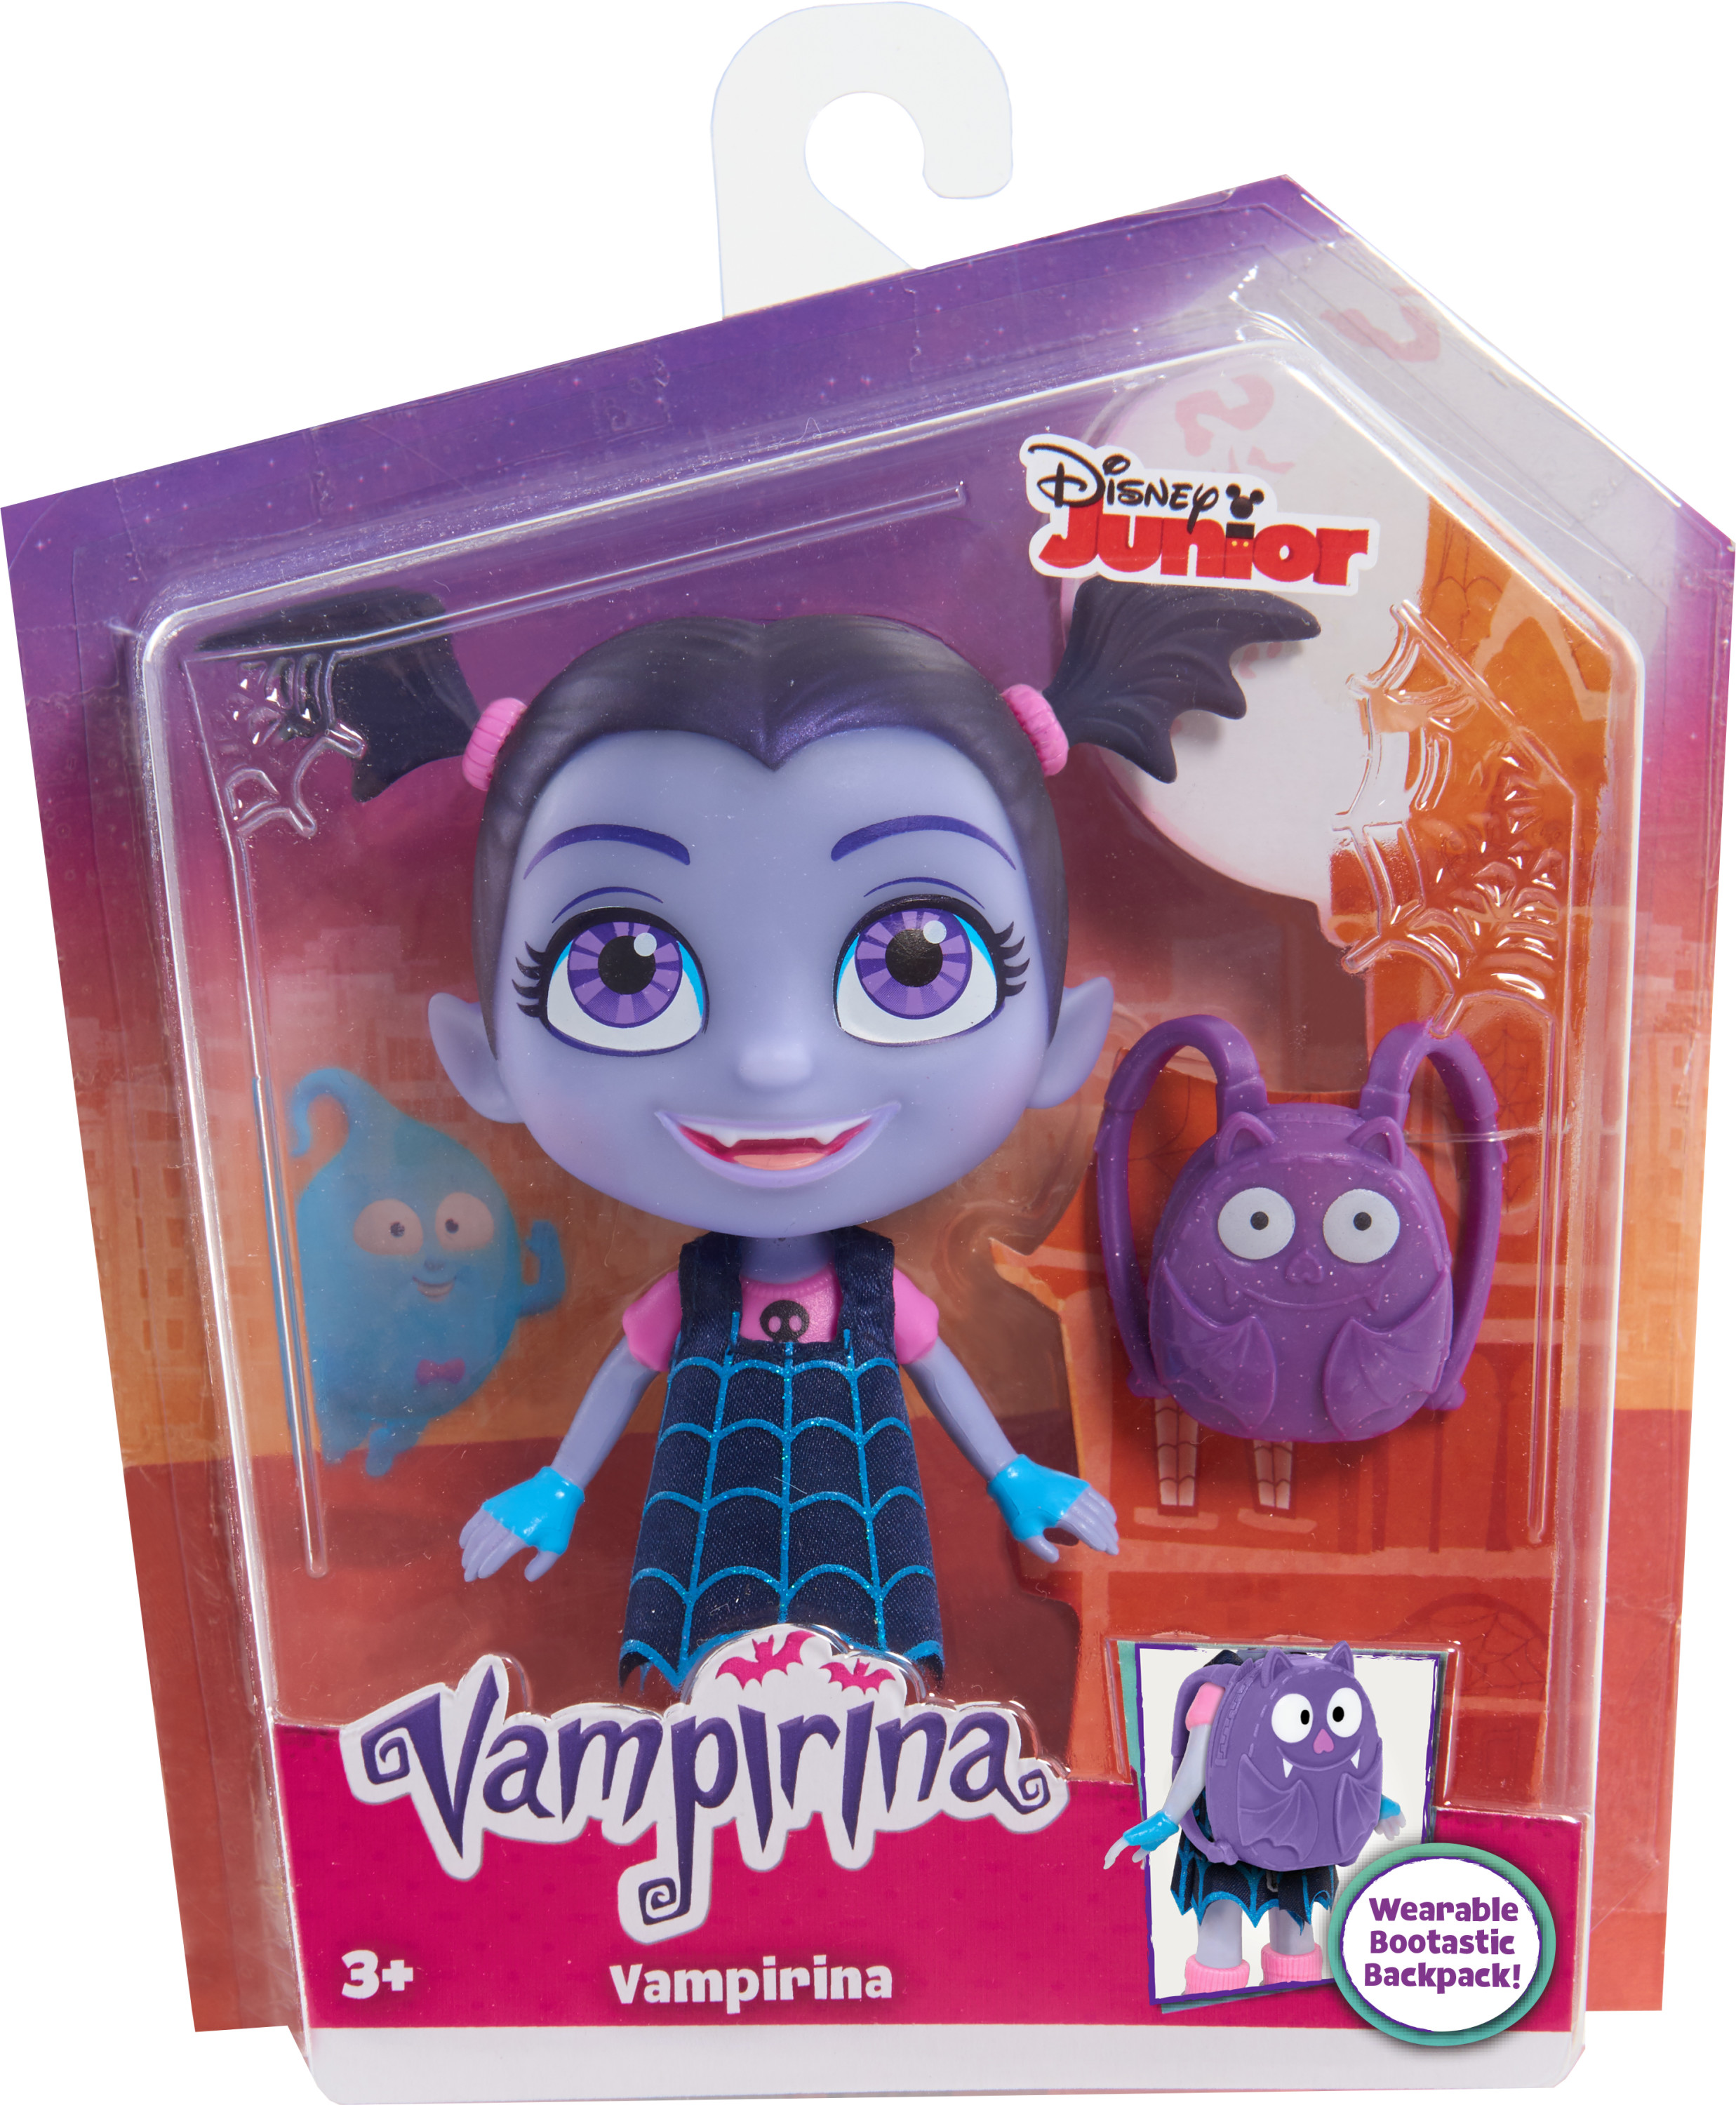 Vampirina ghoul girl doll - vampirina - image 4 of 4